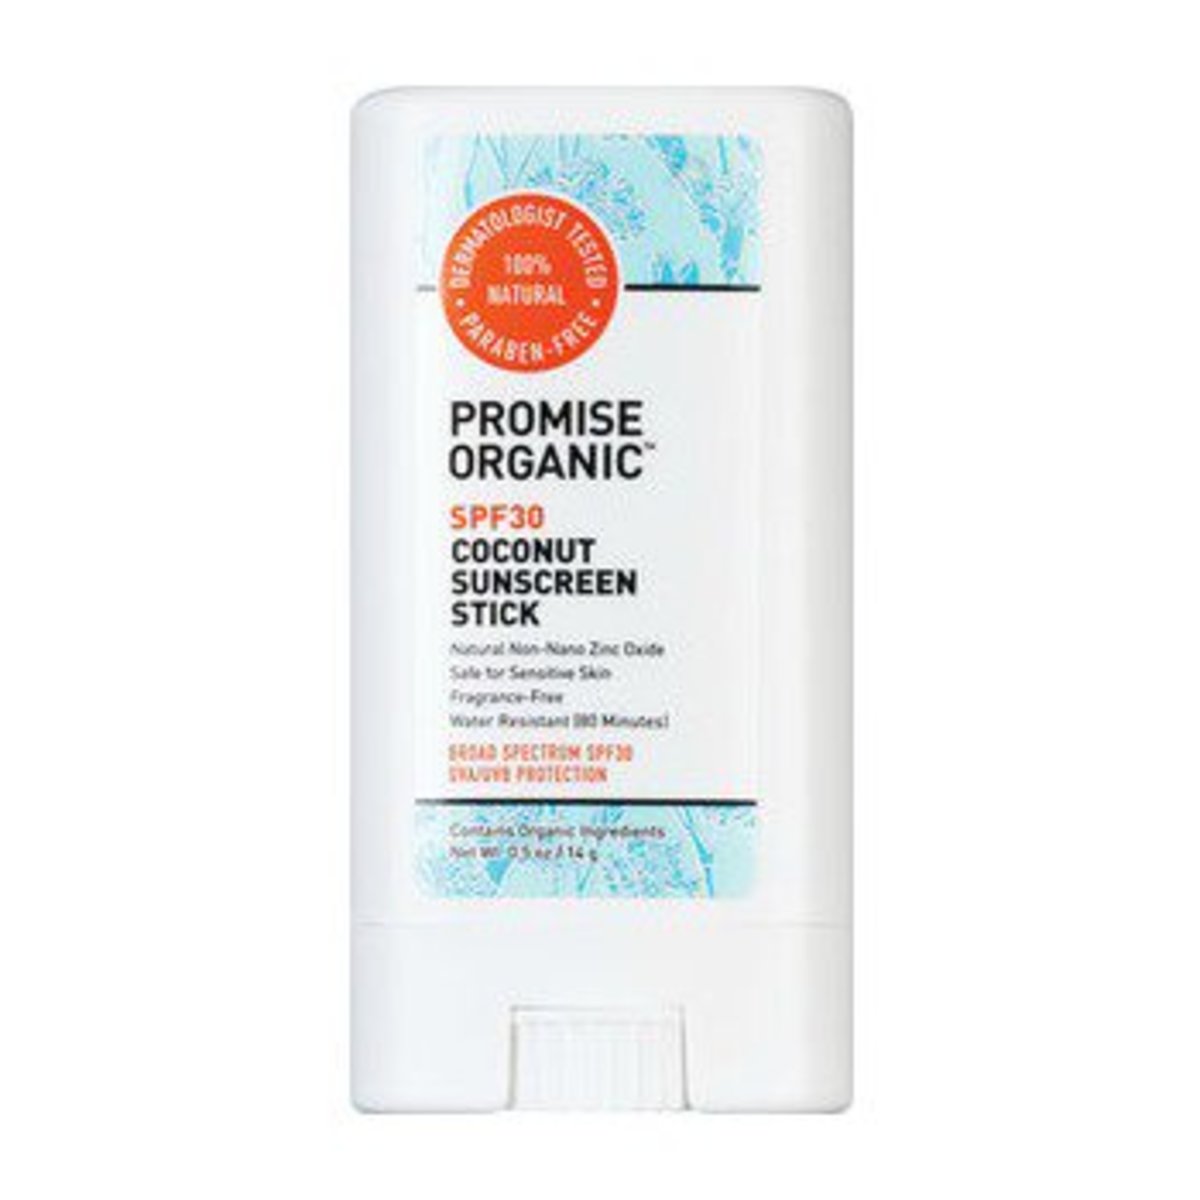 Promise Organic SPF 30 Coconut Sunscreen Stick